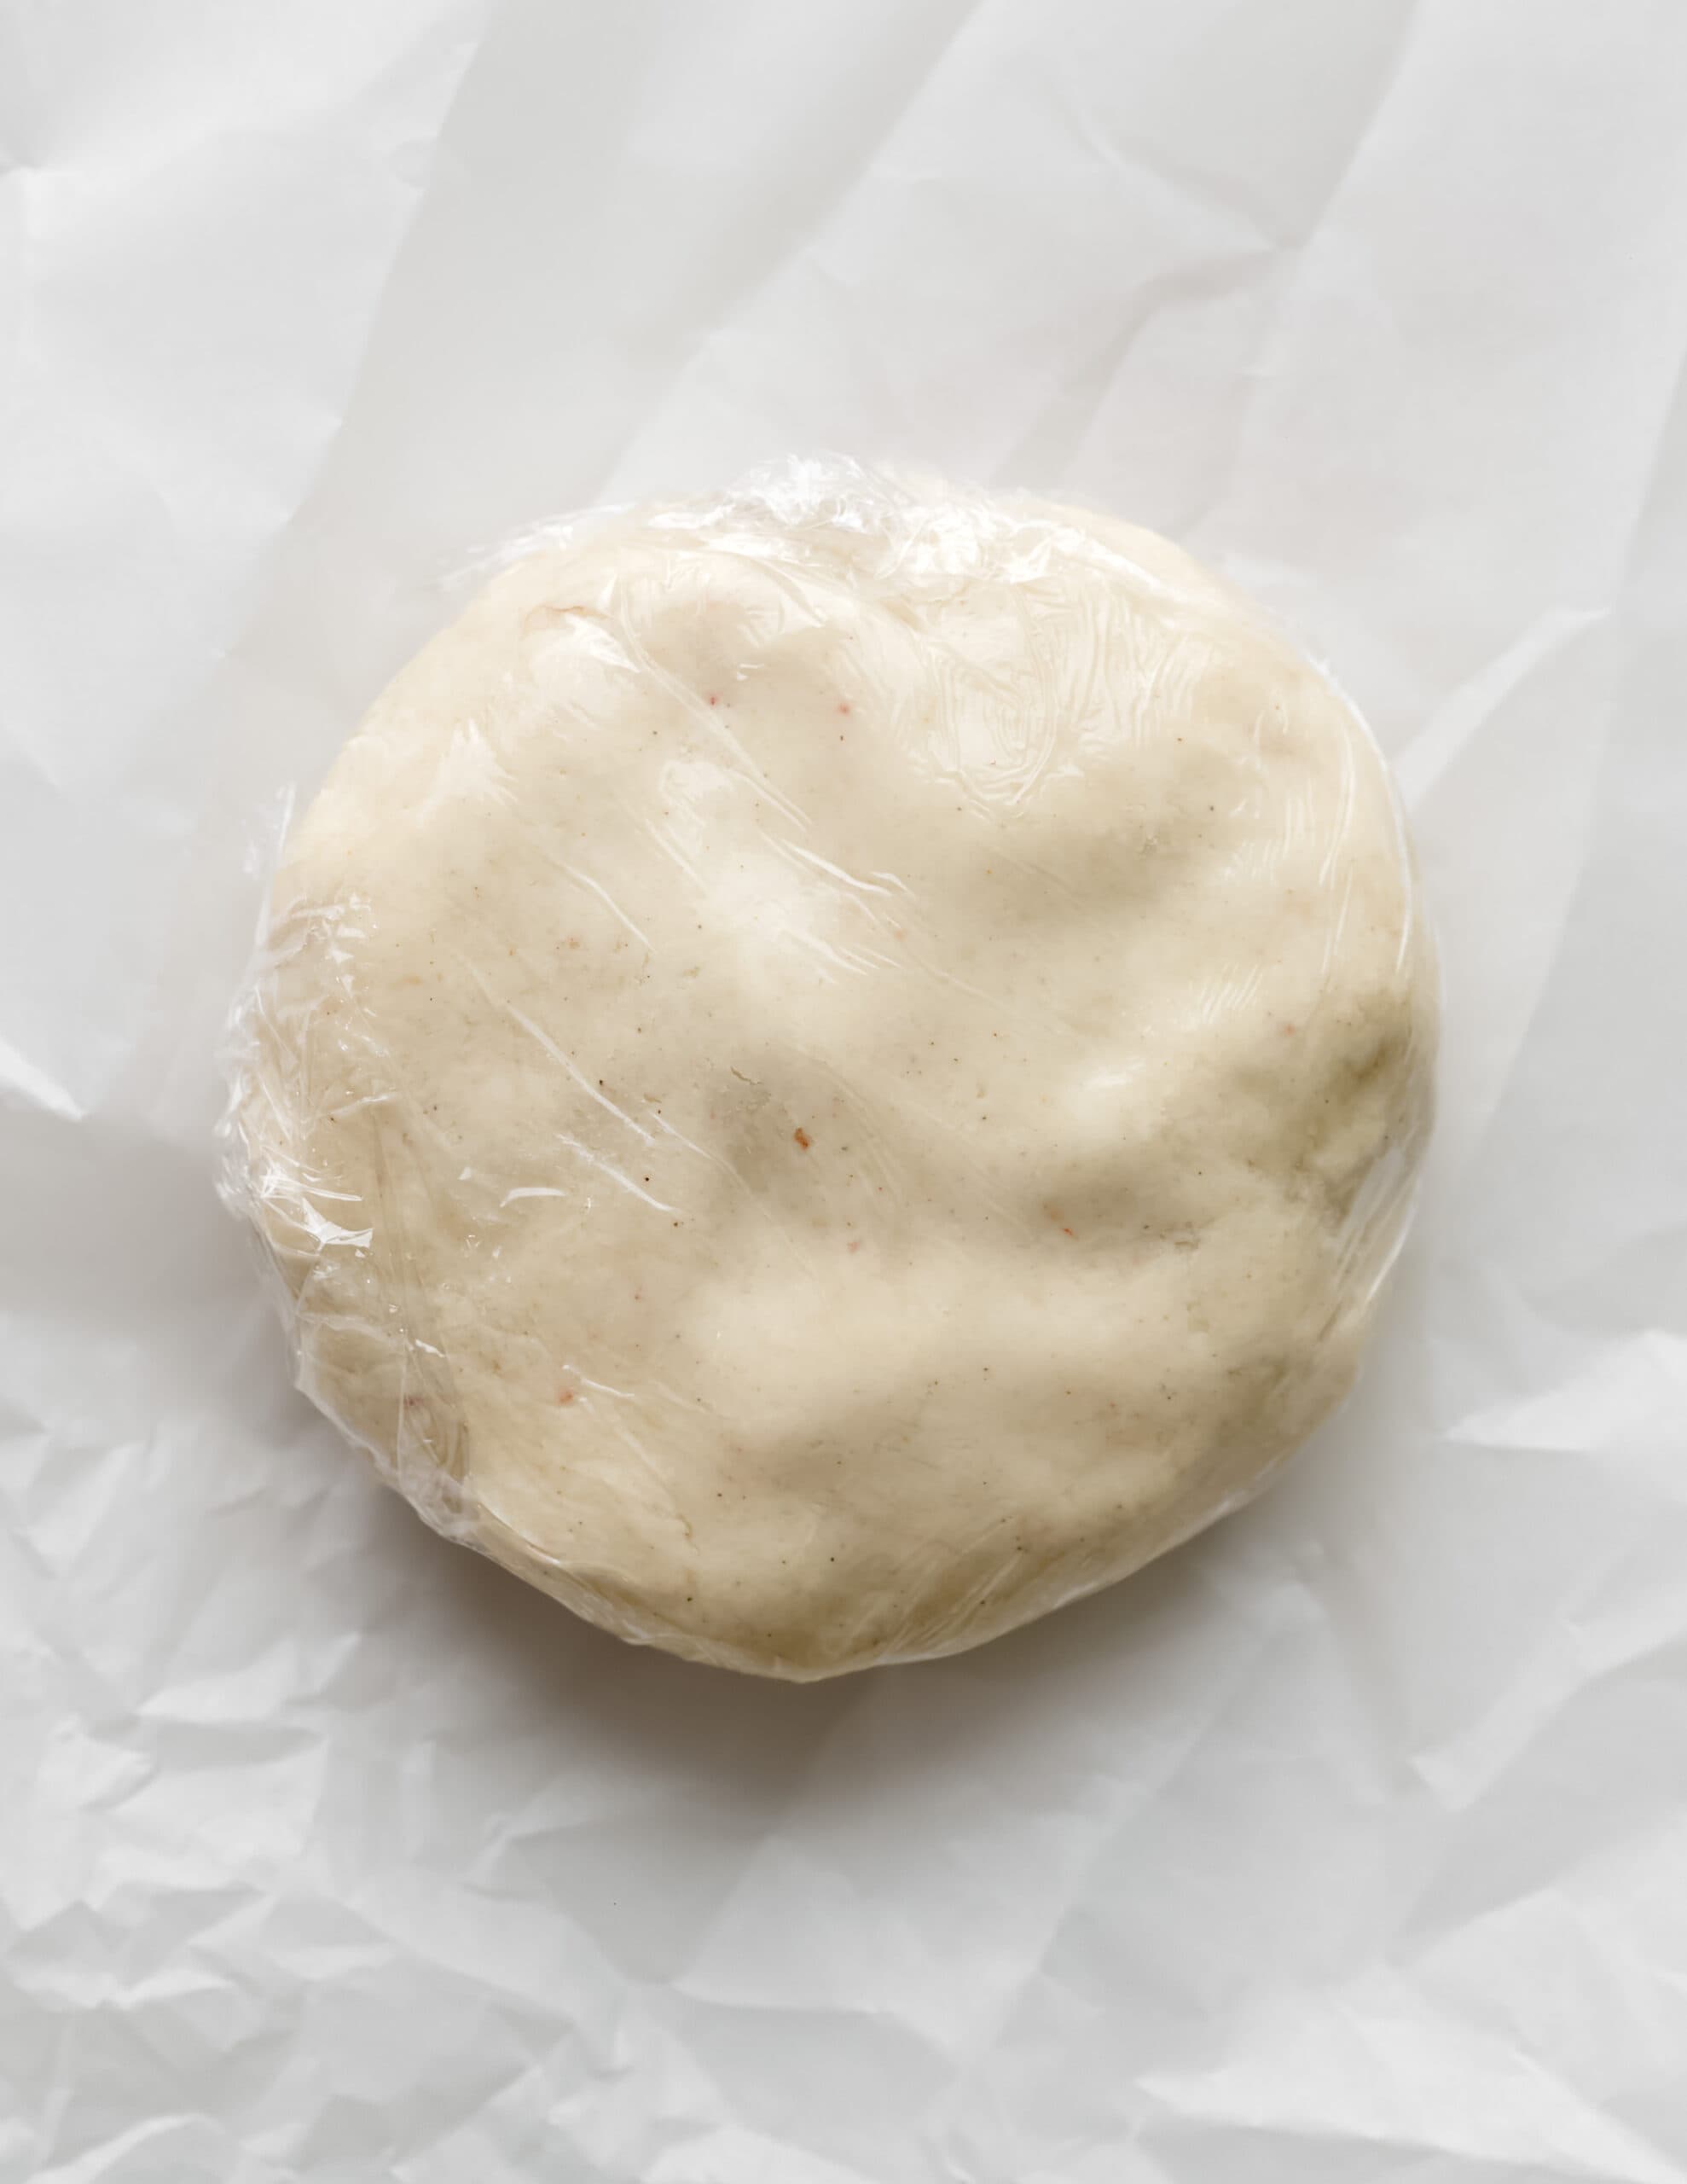 A flat disc if wrapped dough.